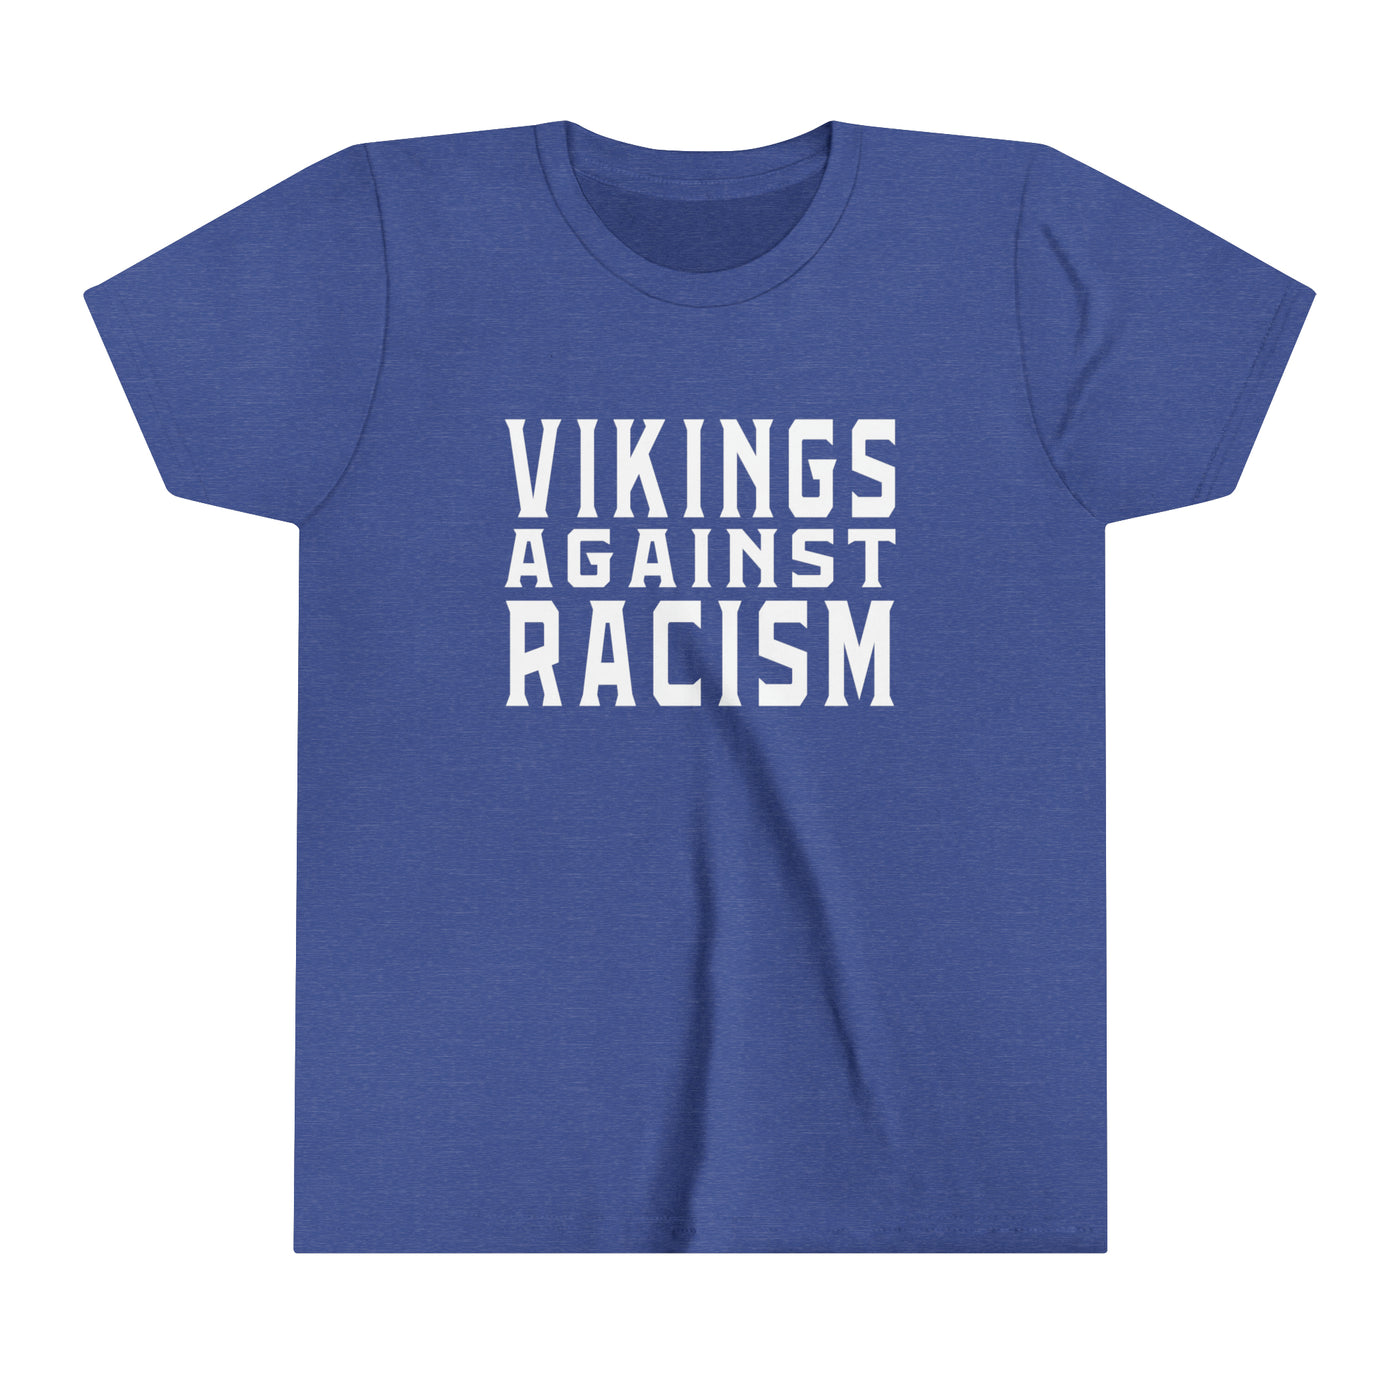 Vikings Against Racism Kids T-Shirt